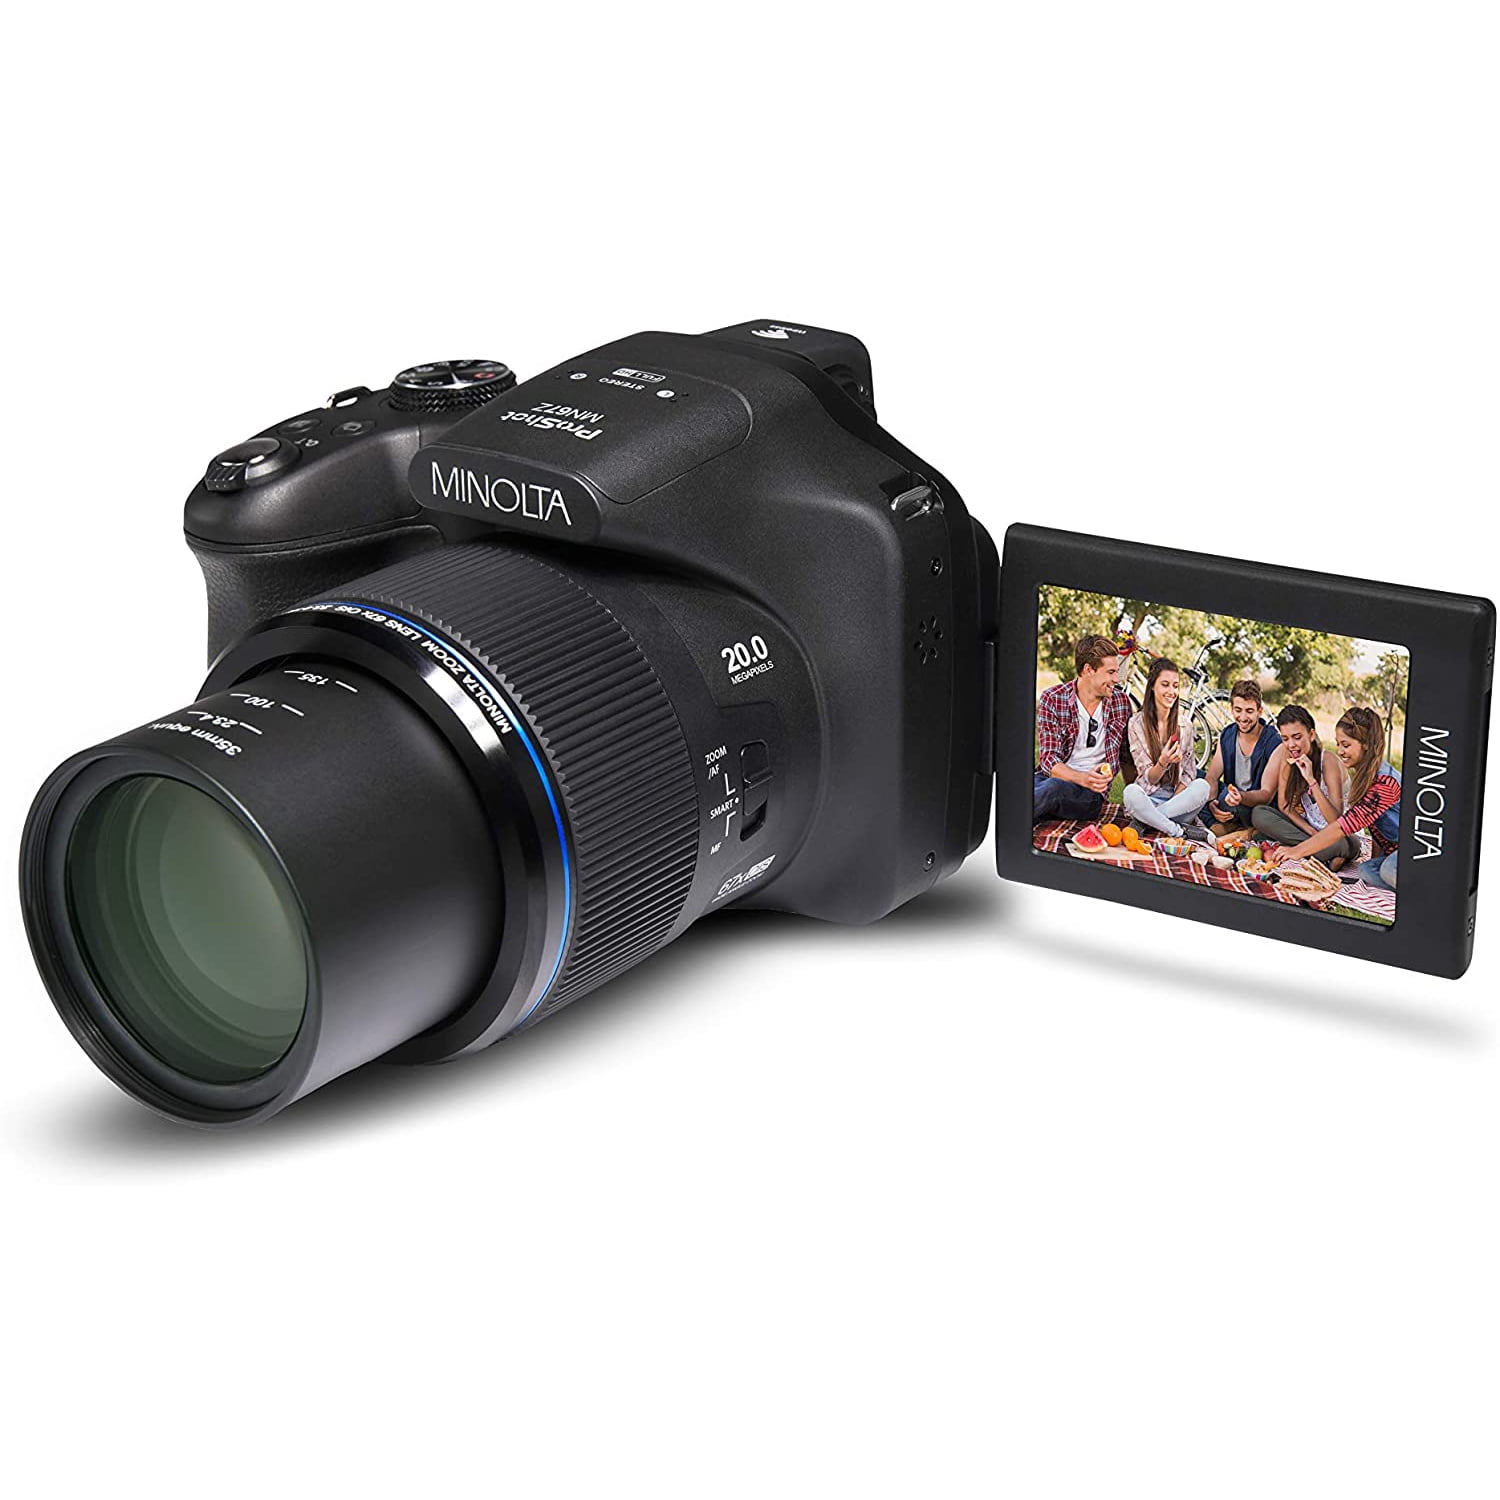 MN67Z 20MP FHD Wi-Fi Bridge Camera with 67x Optical Zoom - Black